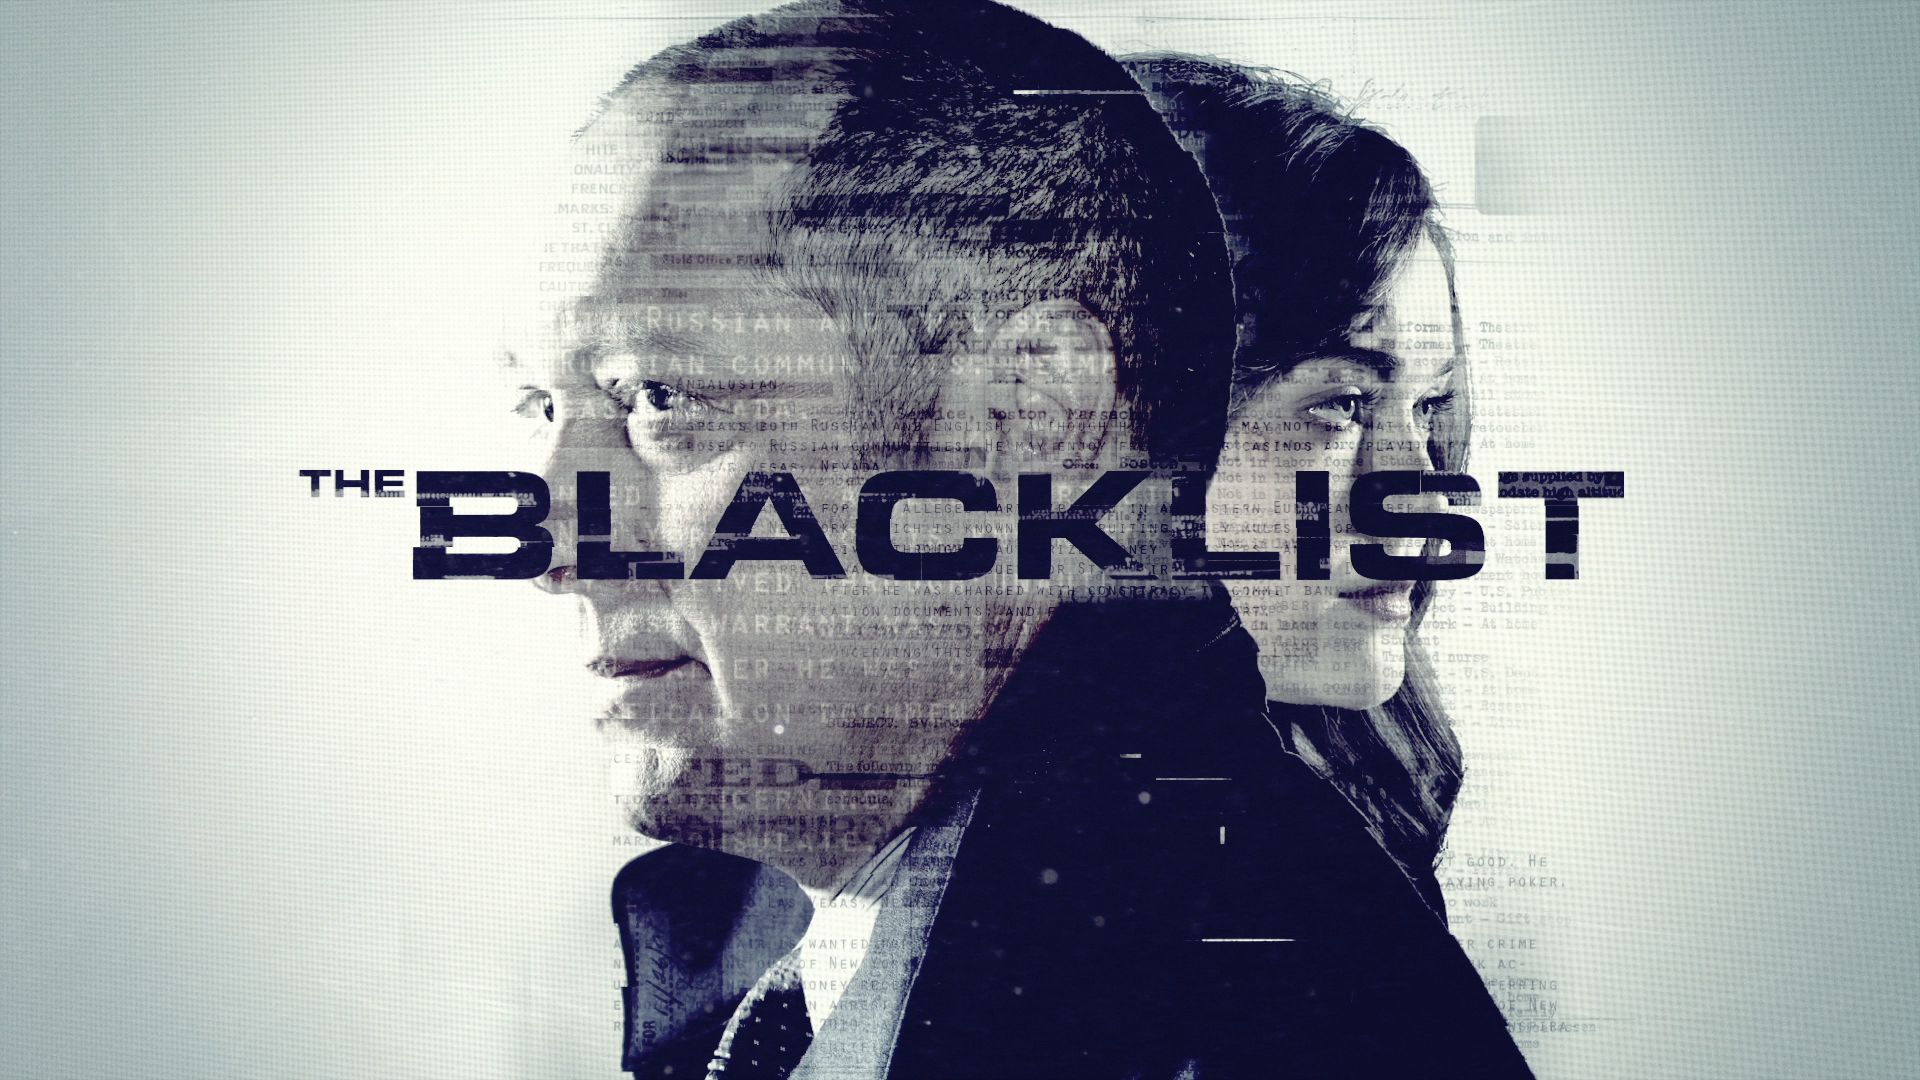 The Blacklist (Season 1). On Air Promotion Brand Pkg